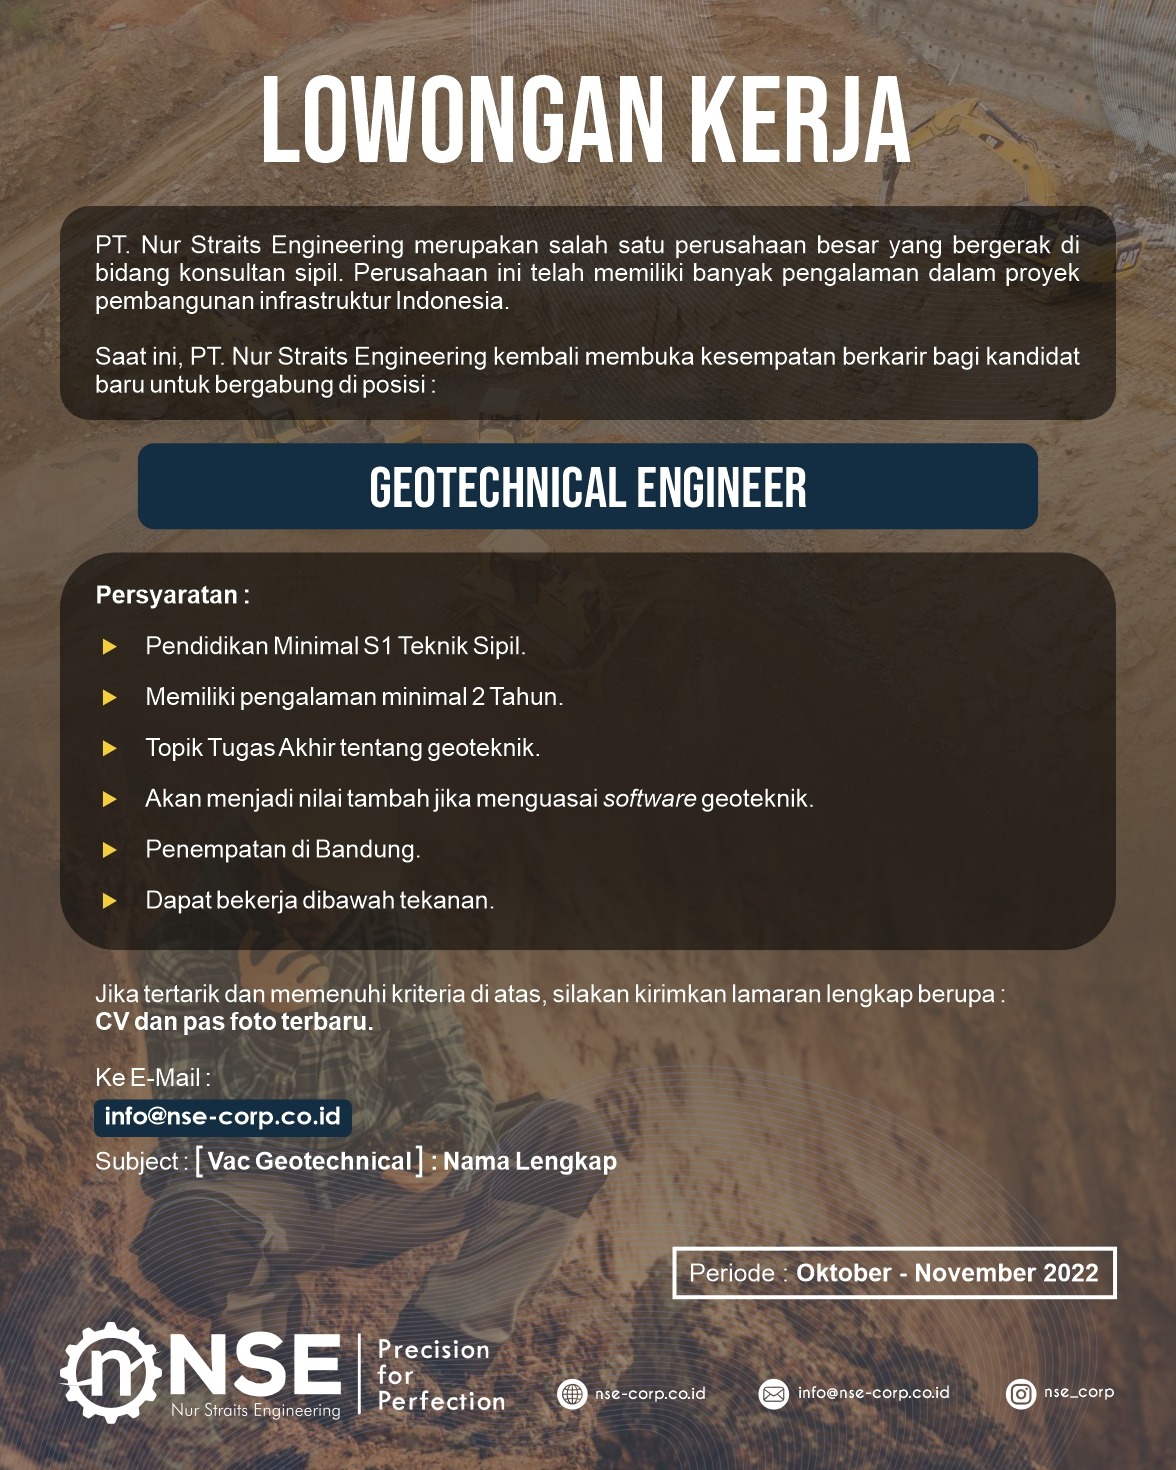 Geotechnical Engineer